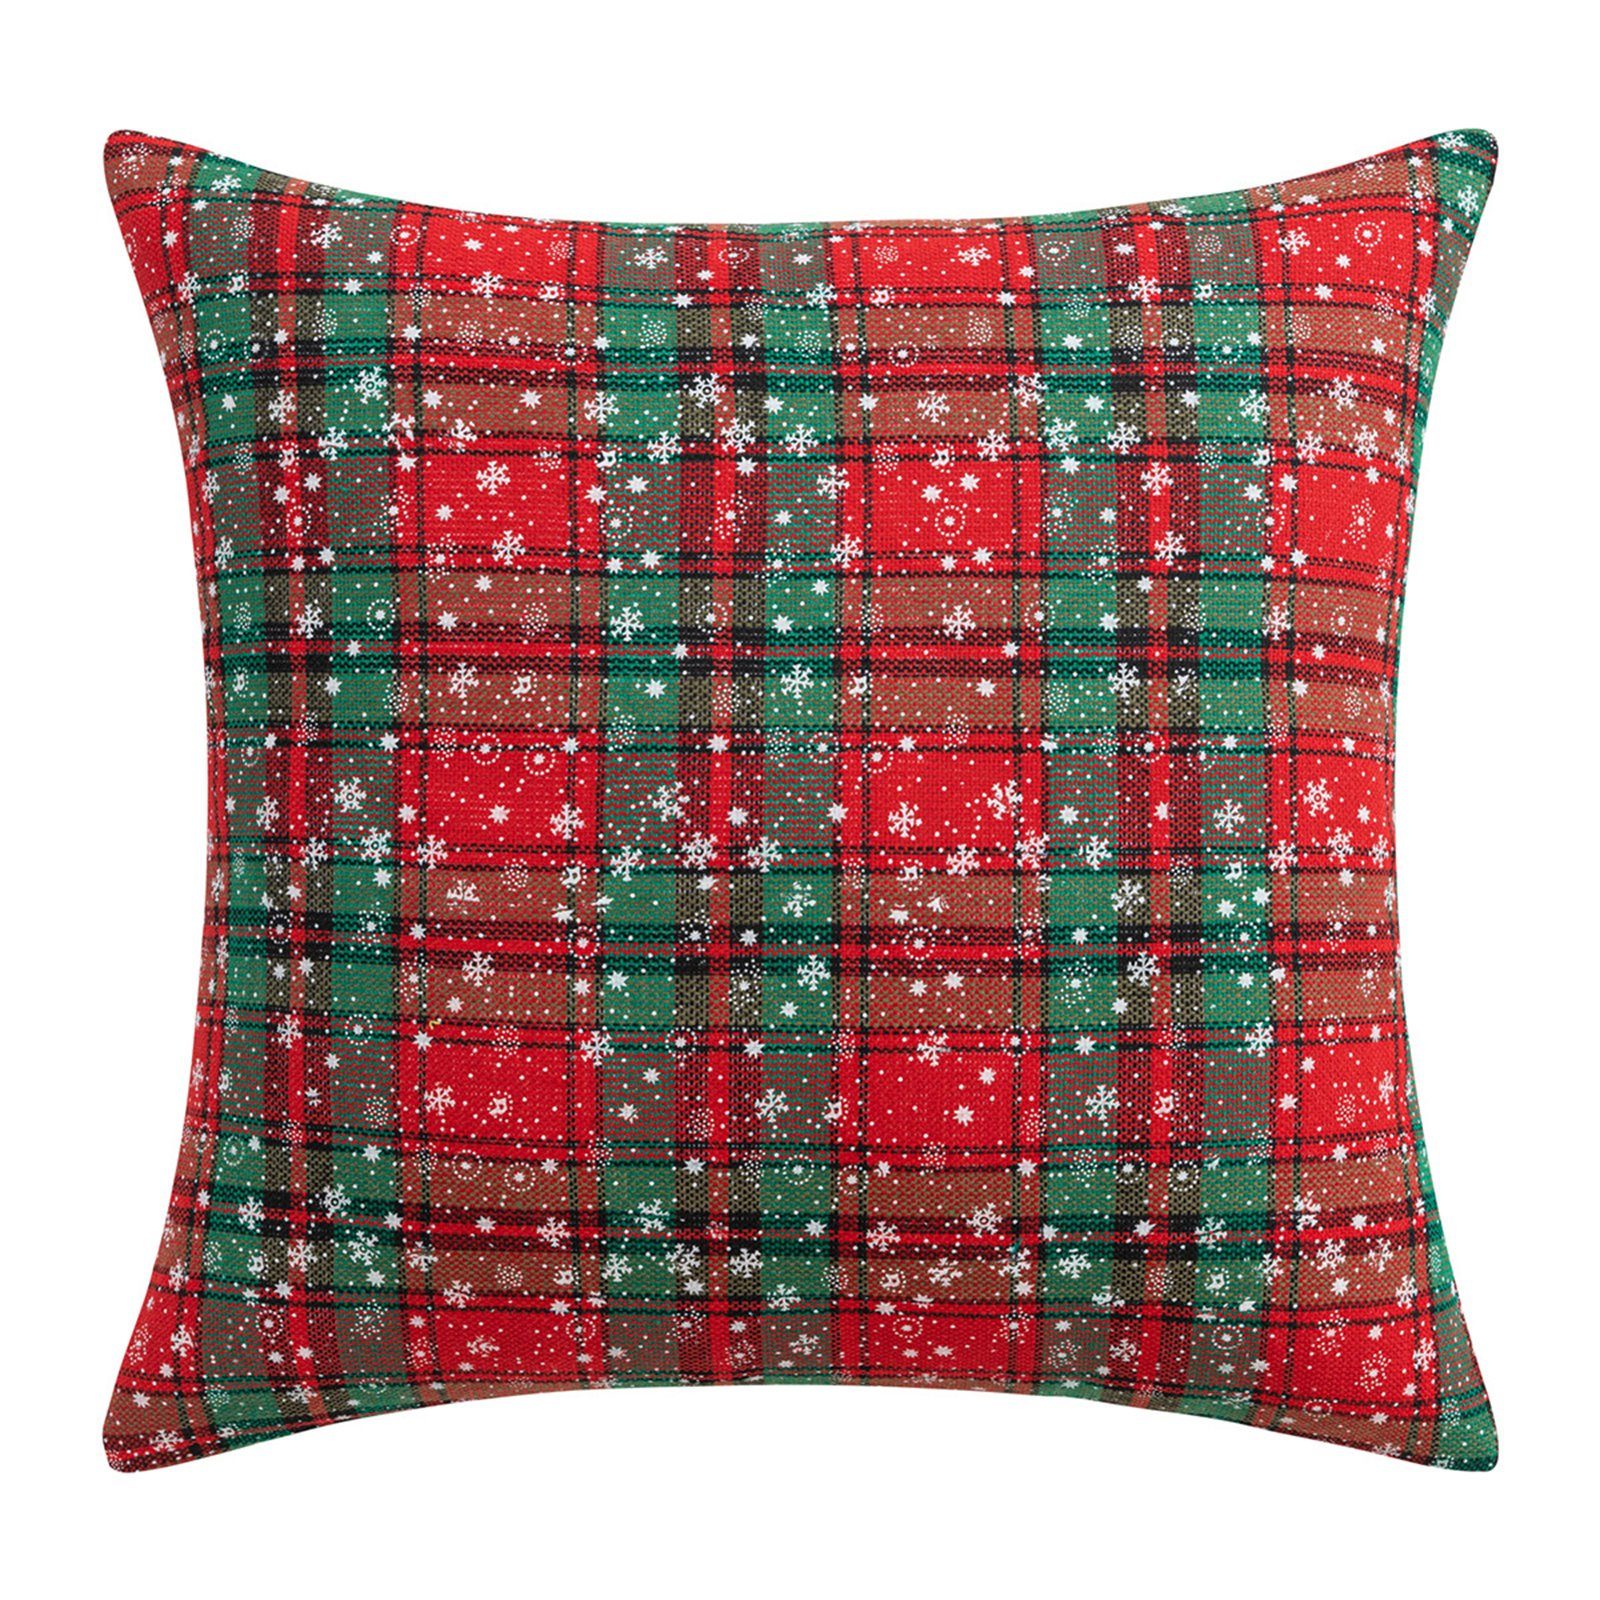 Weihnachten Throw Check&Schneeflocke Party Sofa #3 Kissenbezüge Deko (2 Kissenbezug,45x45cm, Sunicol Kissenbezug Stück),